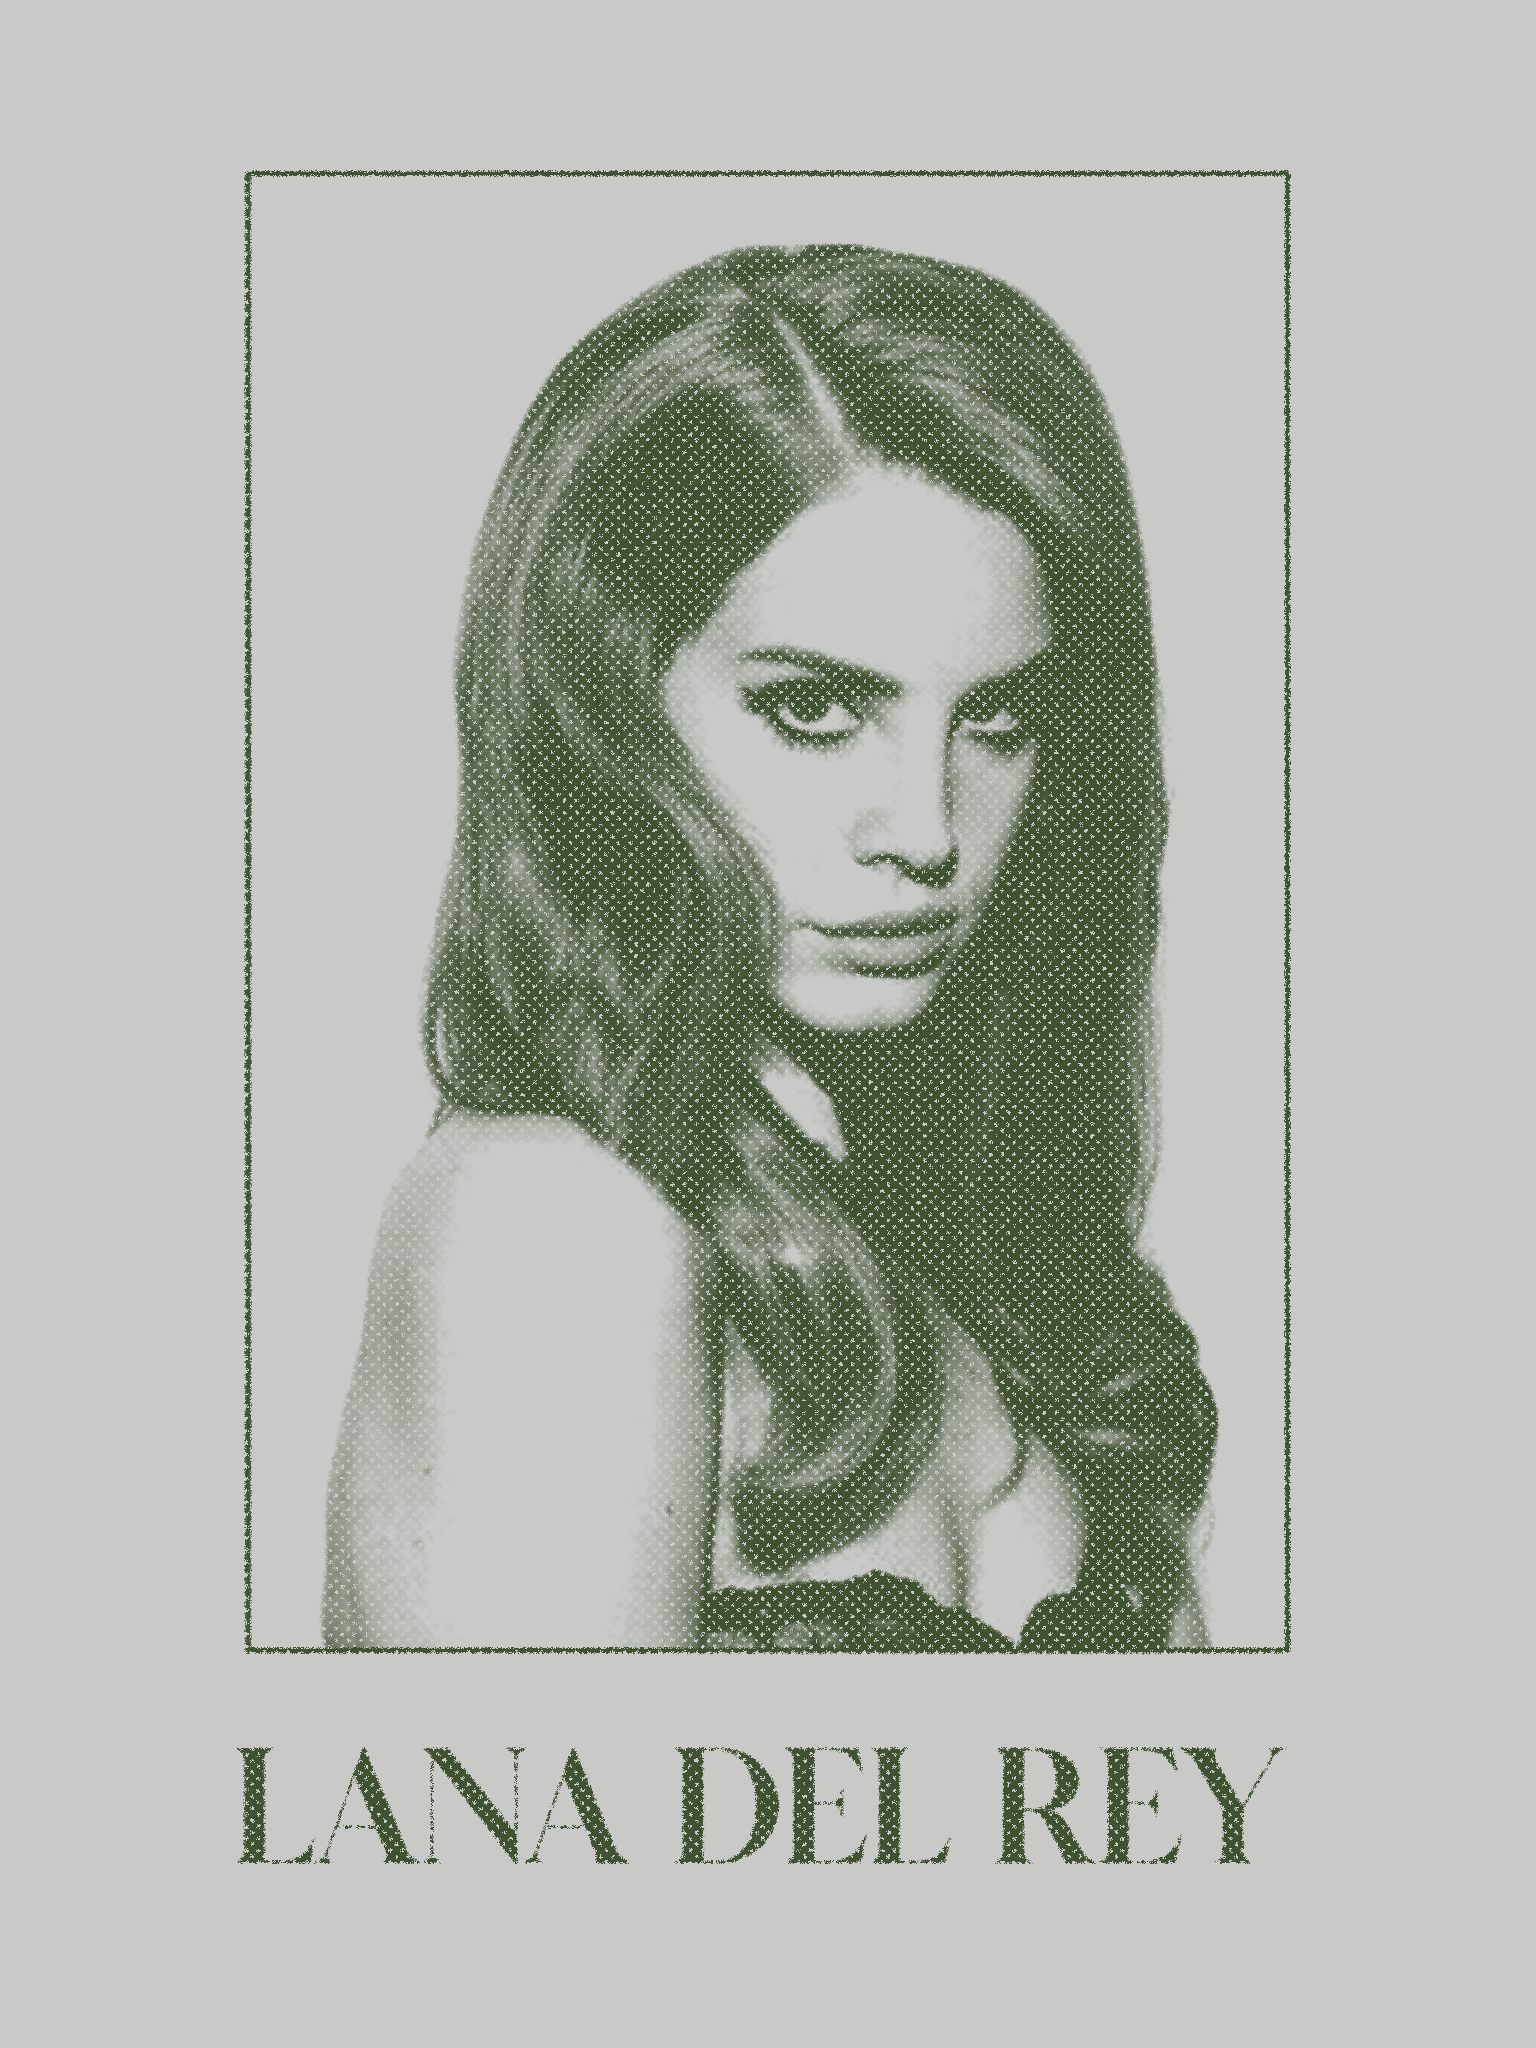 Lana Del Rey aesthetic poster in retro style by dimartflow on DeviantArt